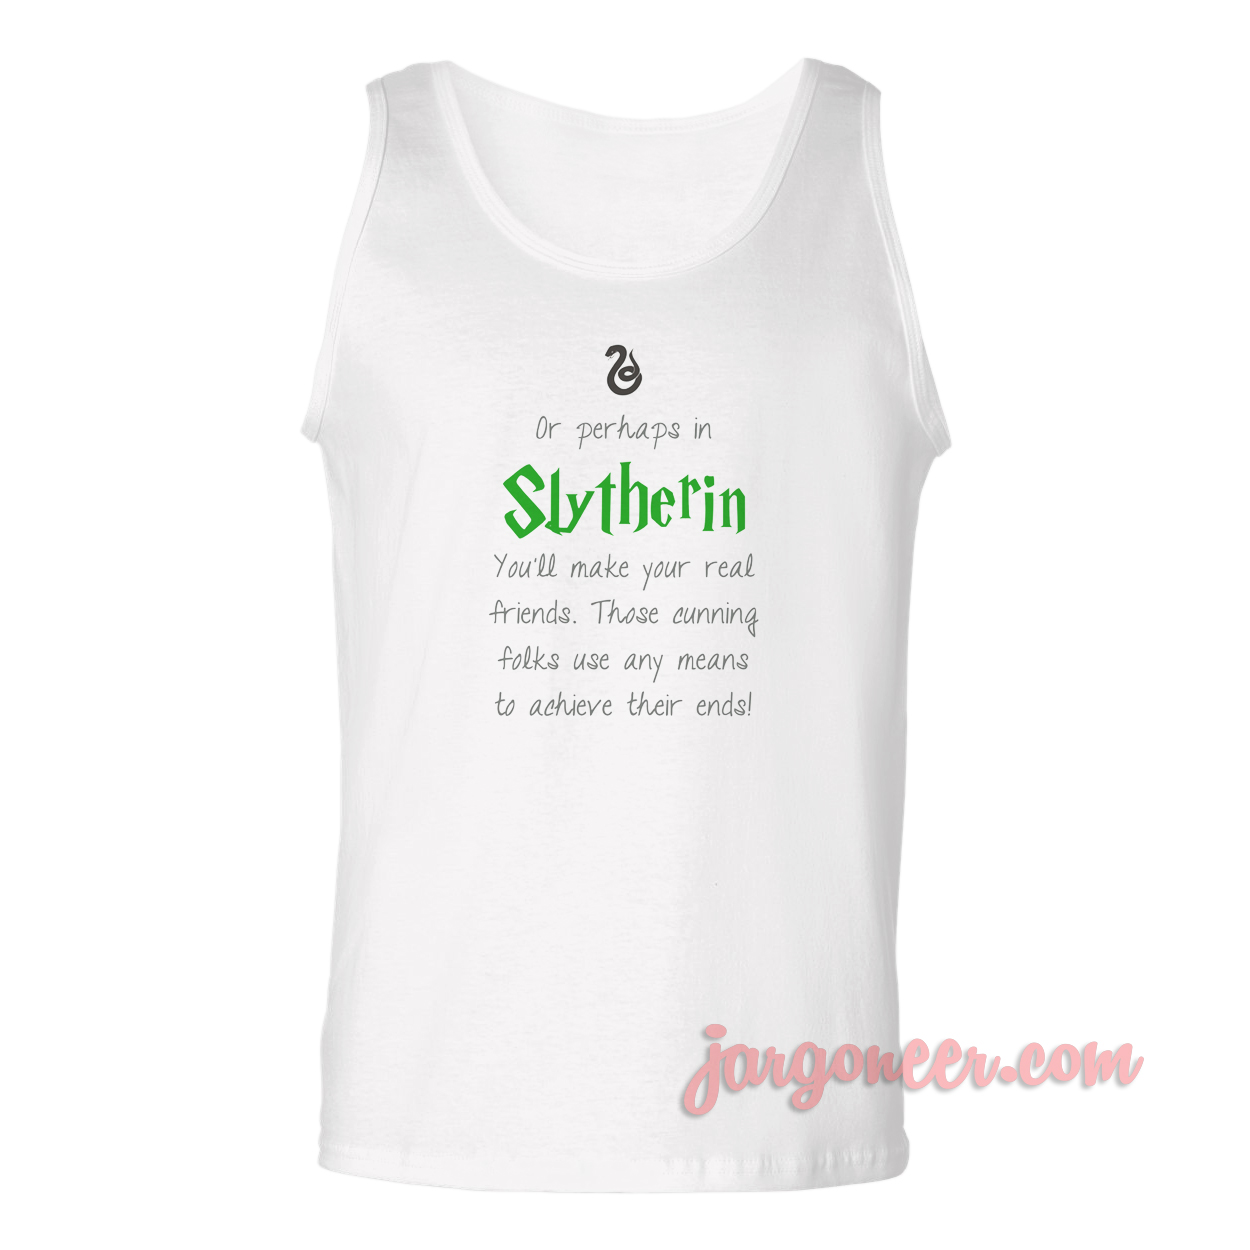 Slytherin Quote - Shop Unique Graphic Cool Shirt Designs